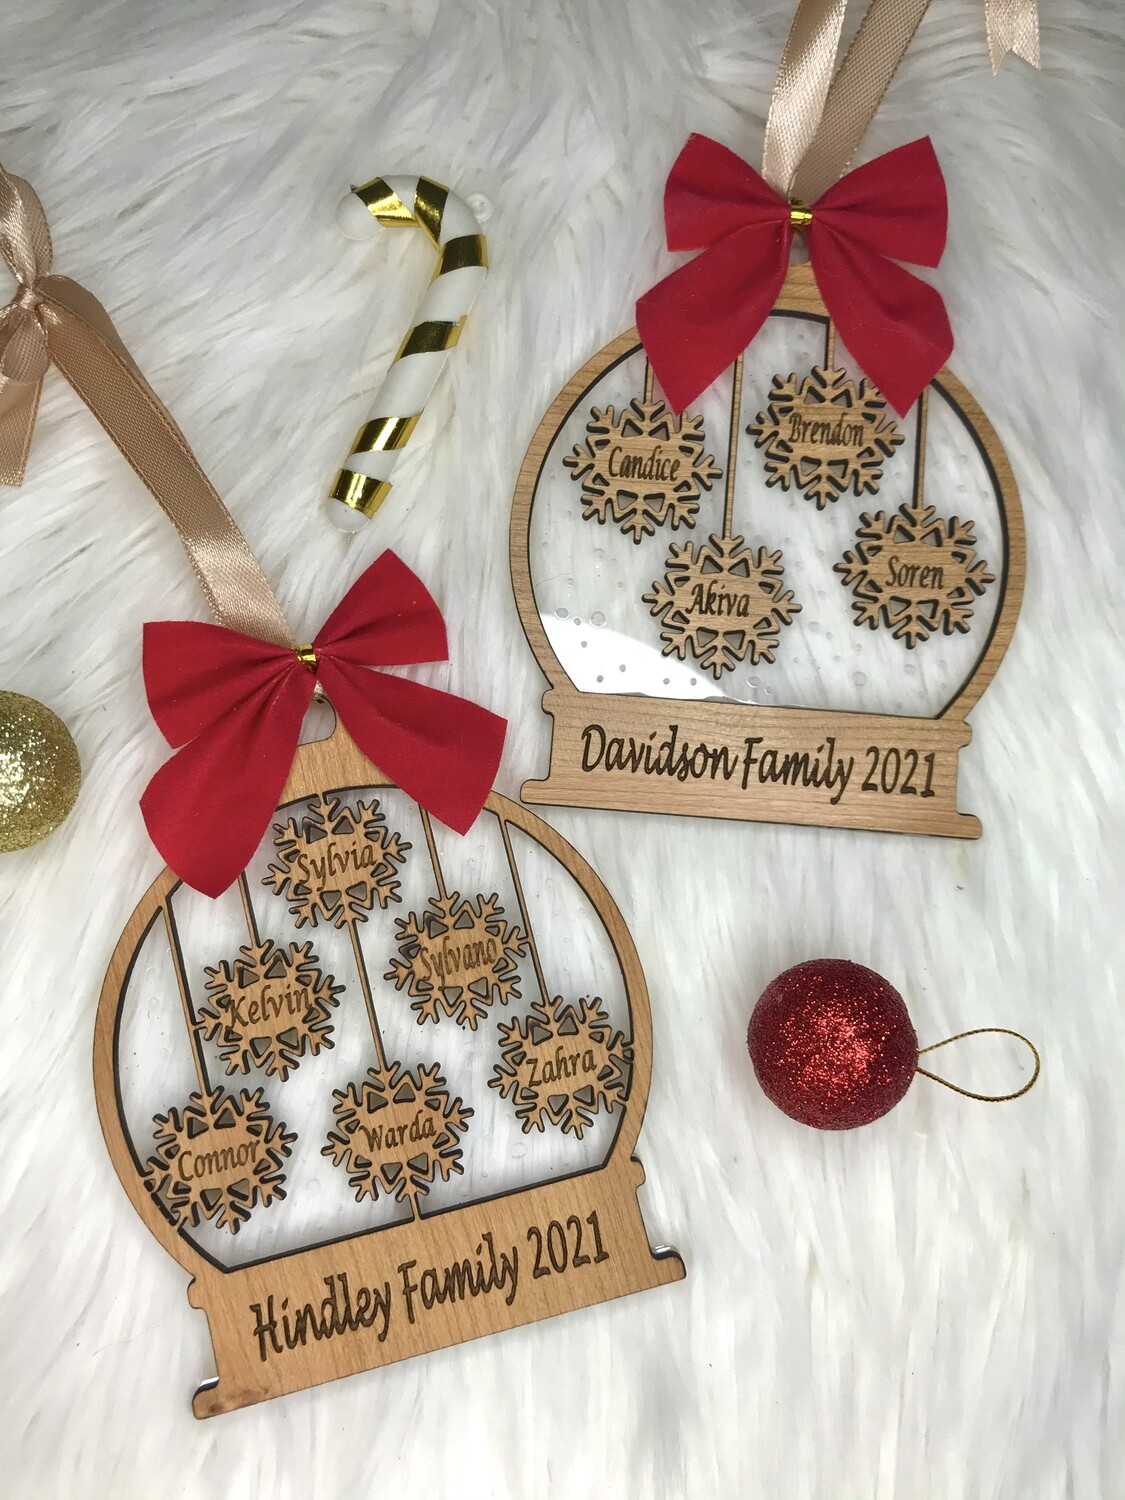 Family Tree Christmas Ornament